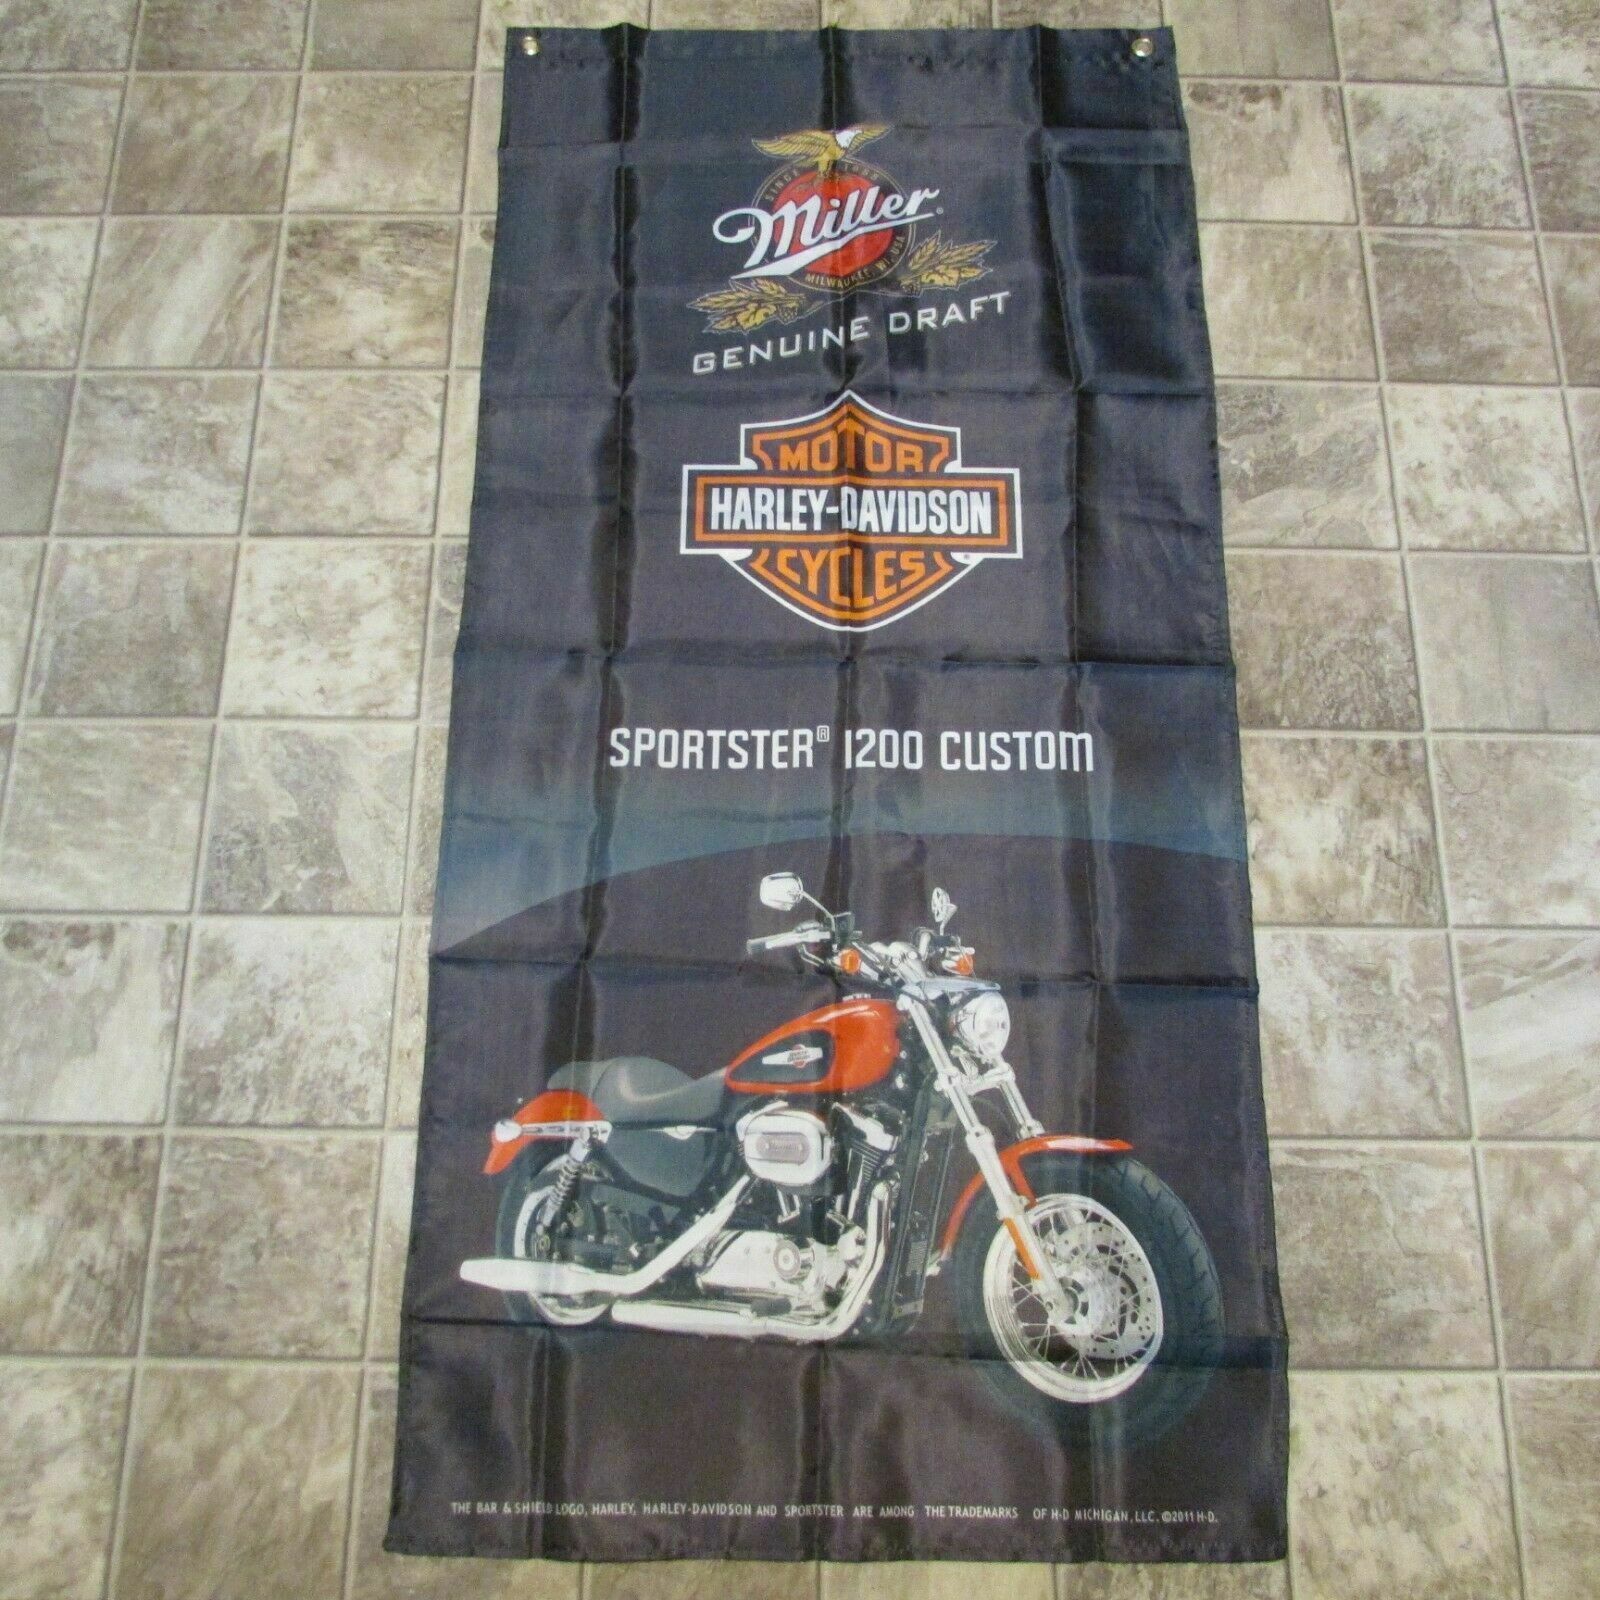 Miller Genuine Draft Harley-davidson Sportster 1200 Custom Banner Flag Rare Find